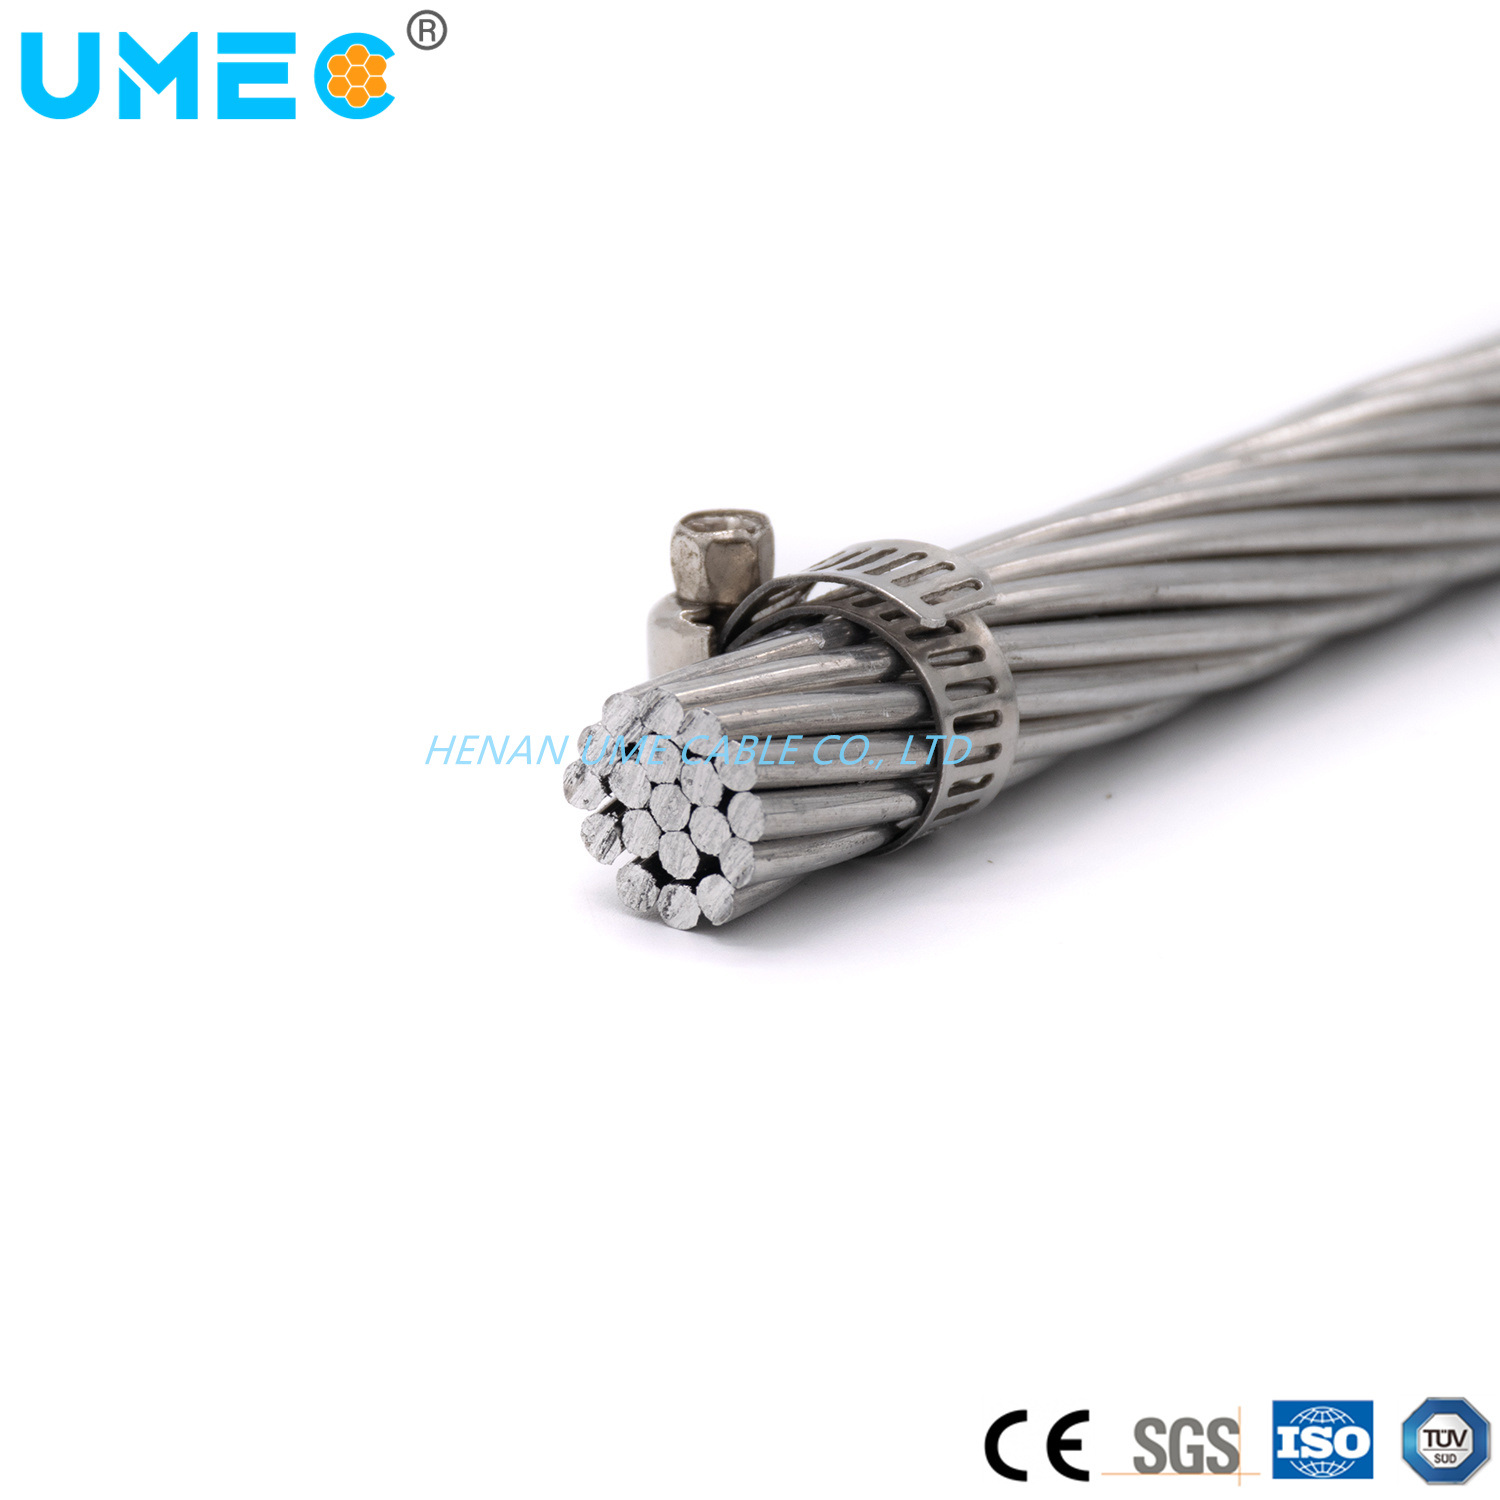 
                IEC 61089 Standard 7/1.83 7/2.29 7/2.89 7/3.63 intrecciato da 16sqm in su Conduttore AAC nudo in alluminio da 1250 mm quadrati
            